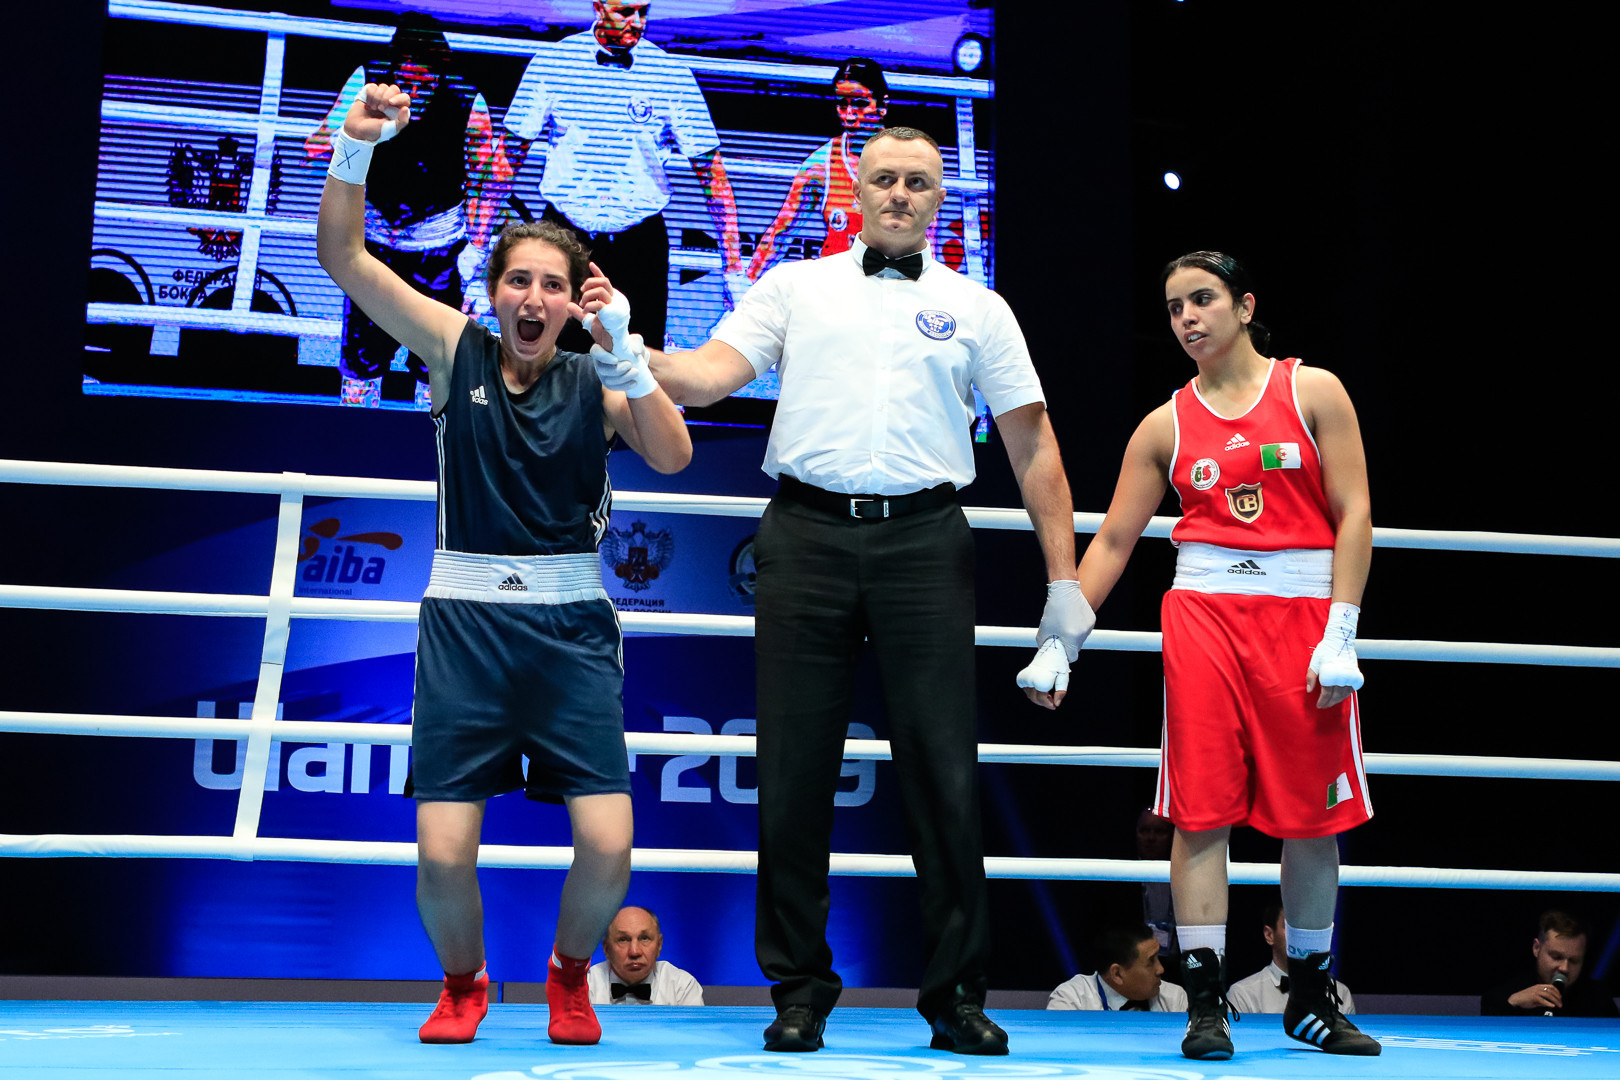 Delight as light welterweight boxers reach AIBA Women's World Championship quarter-finals